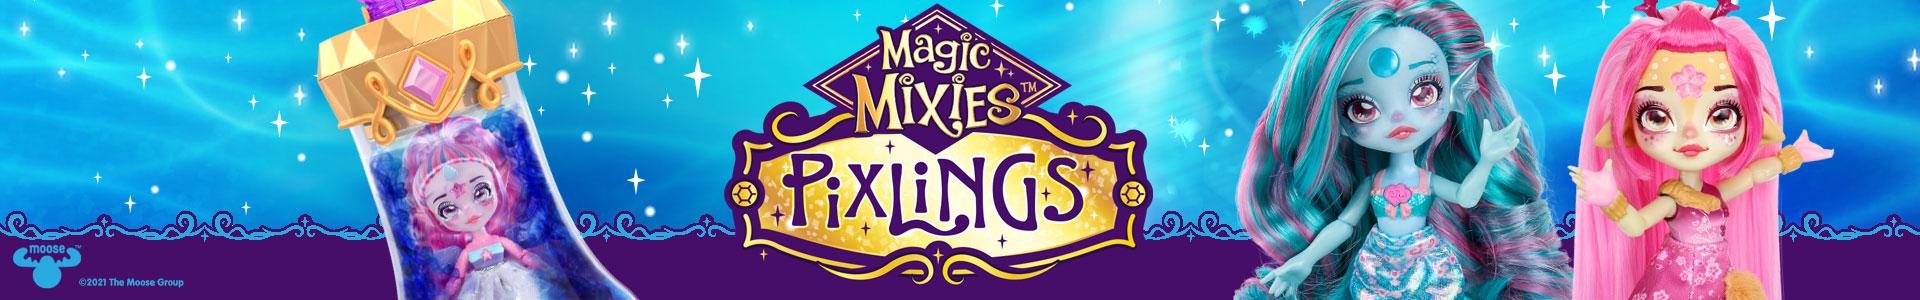 Magic Mixies - Pixlings